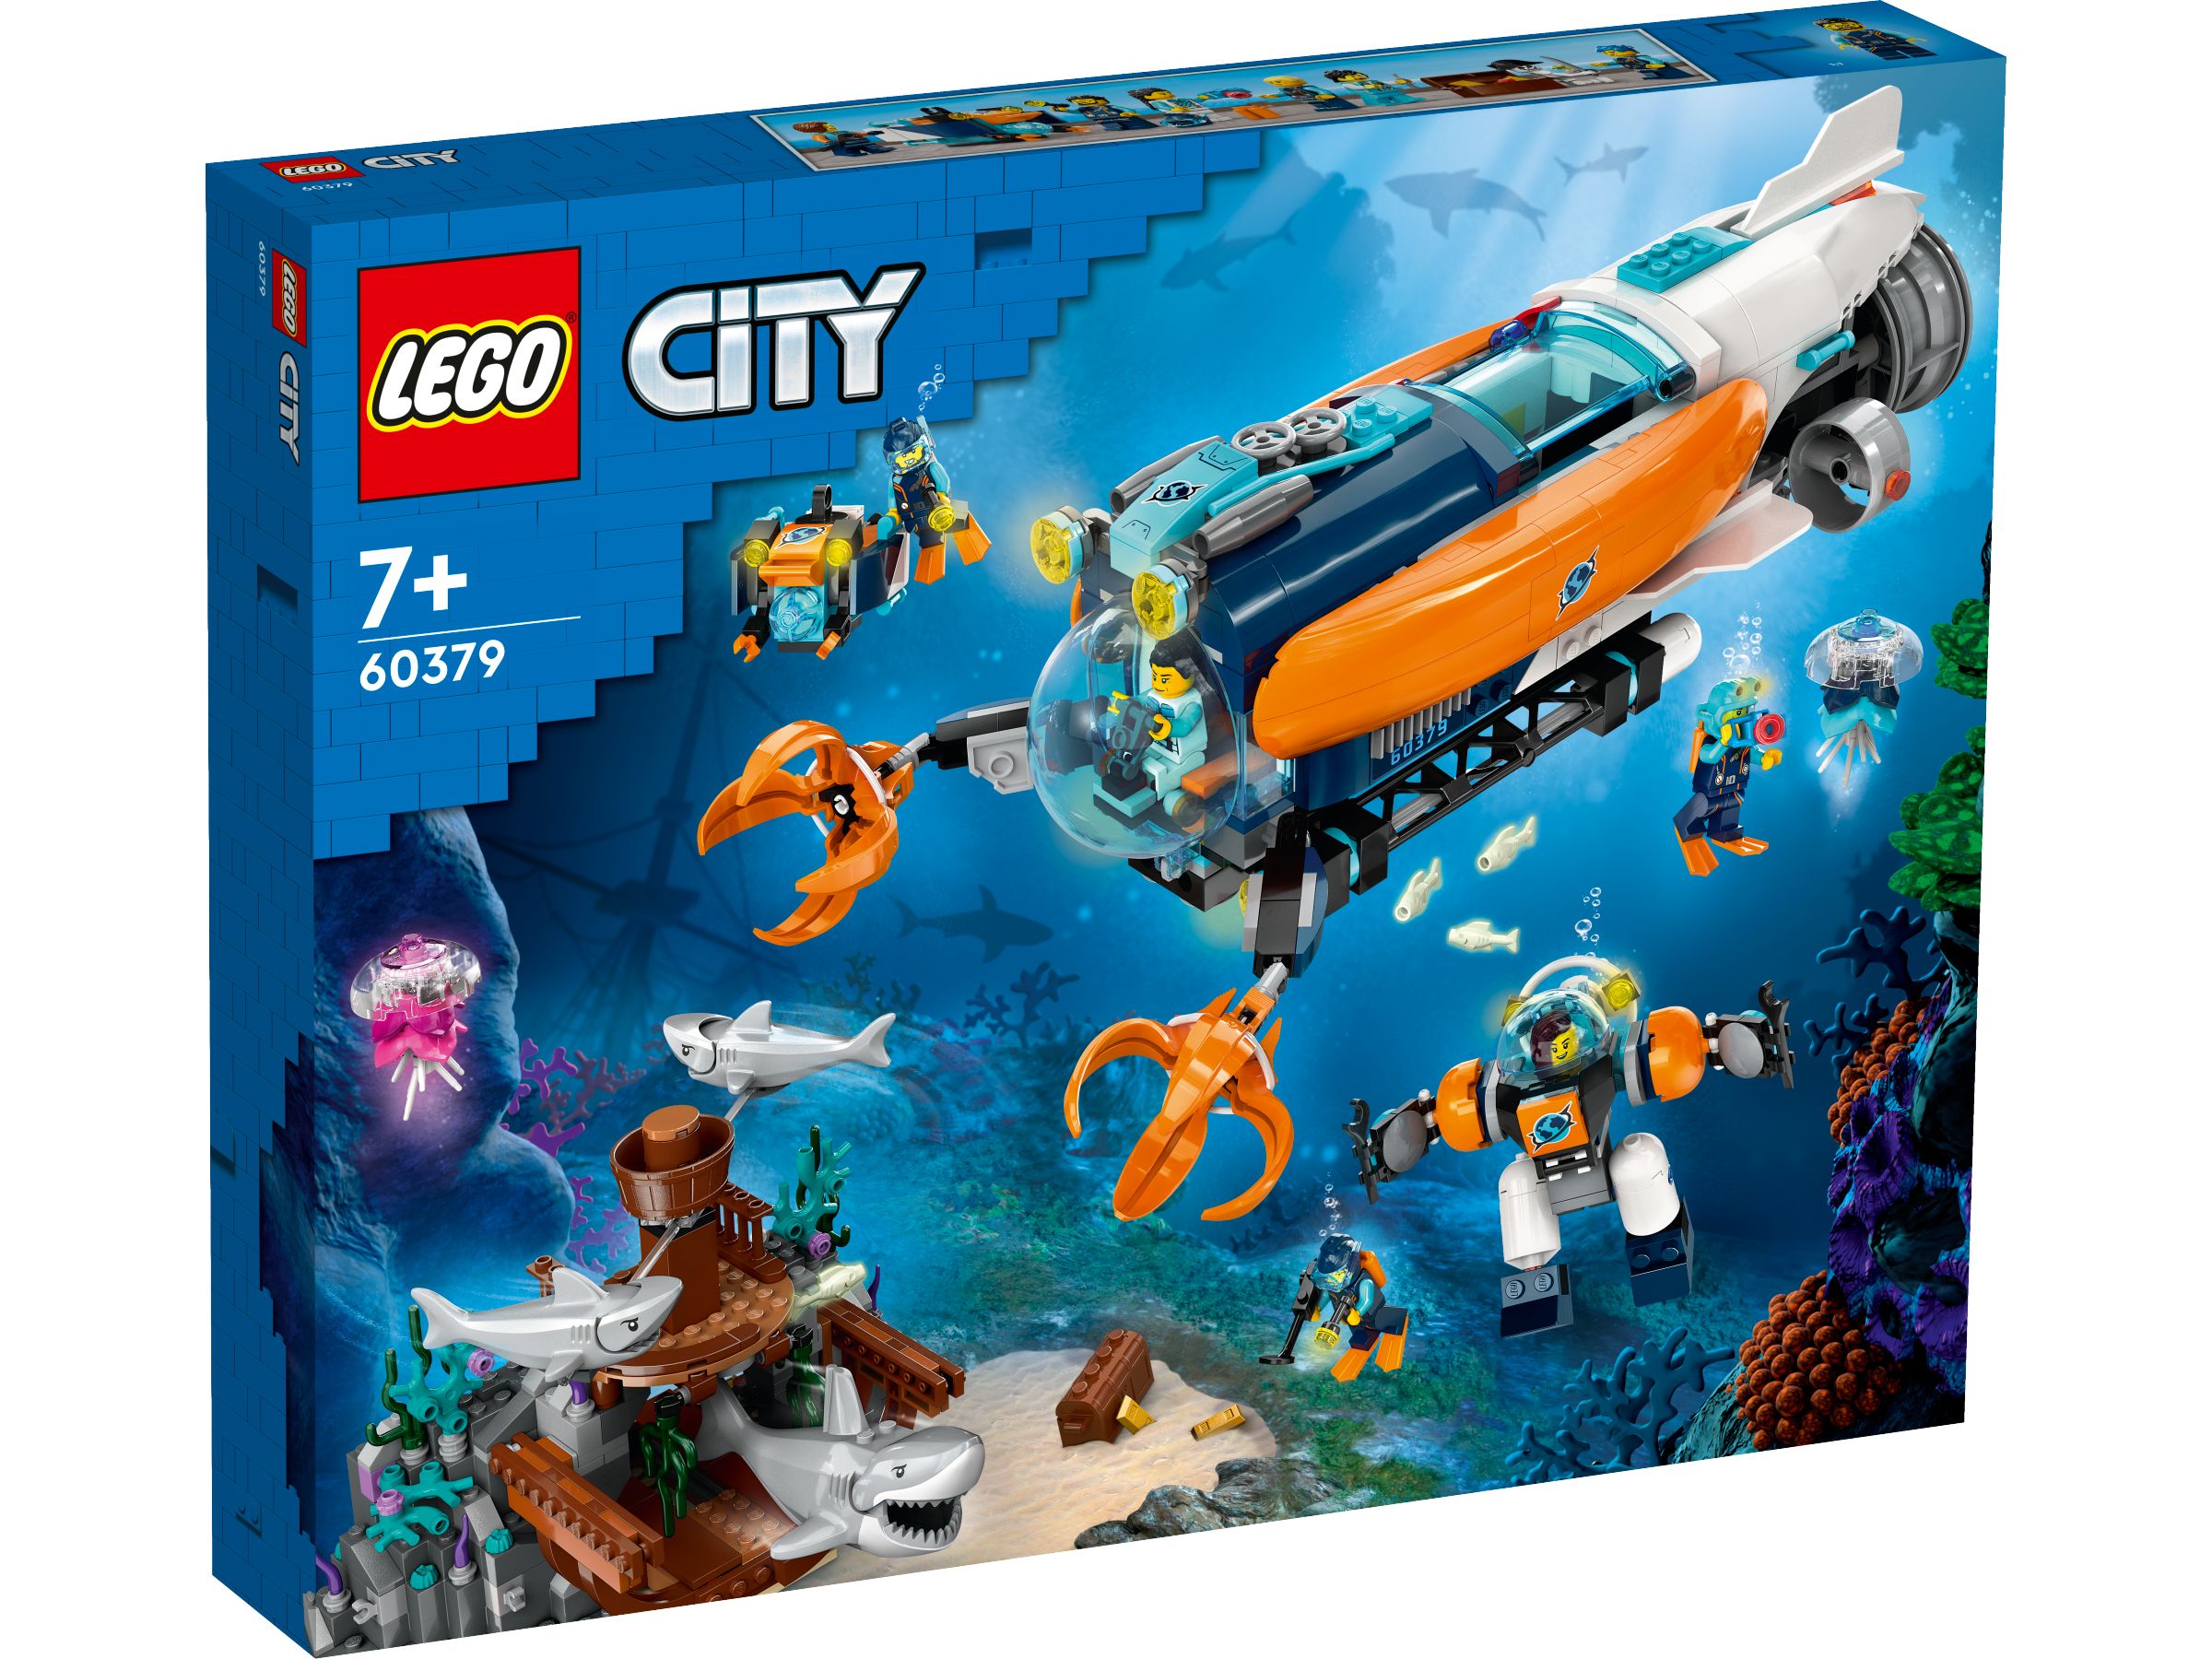 LEGO City 60379 Forscher-U-Boot LEGO_60379_Box1_v29.jpg